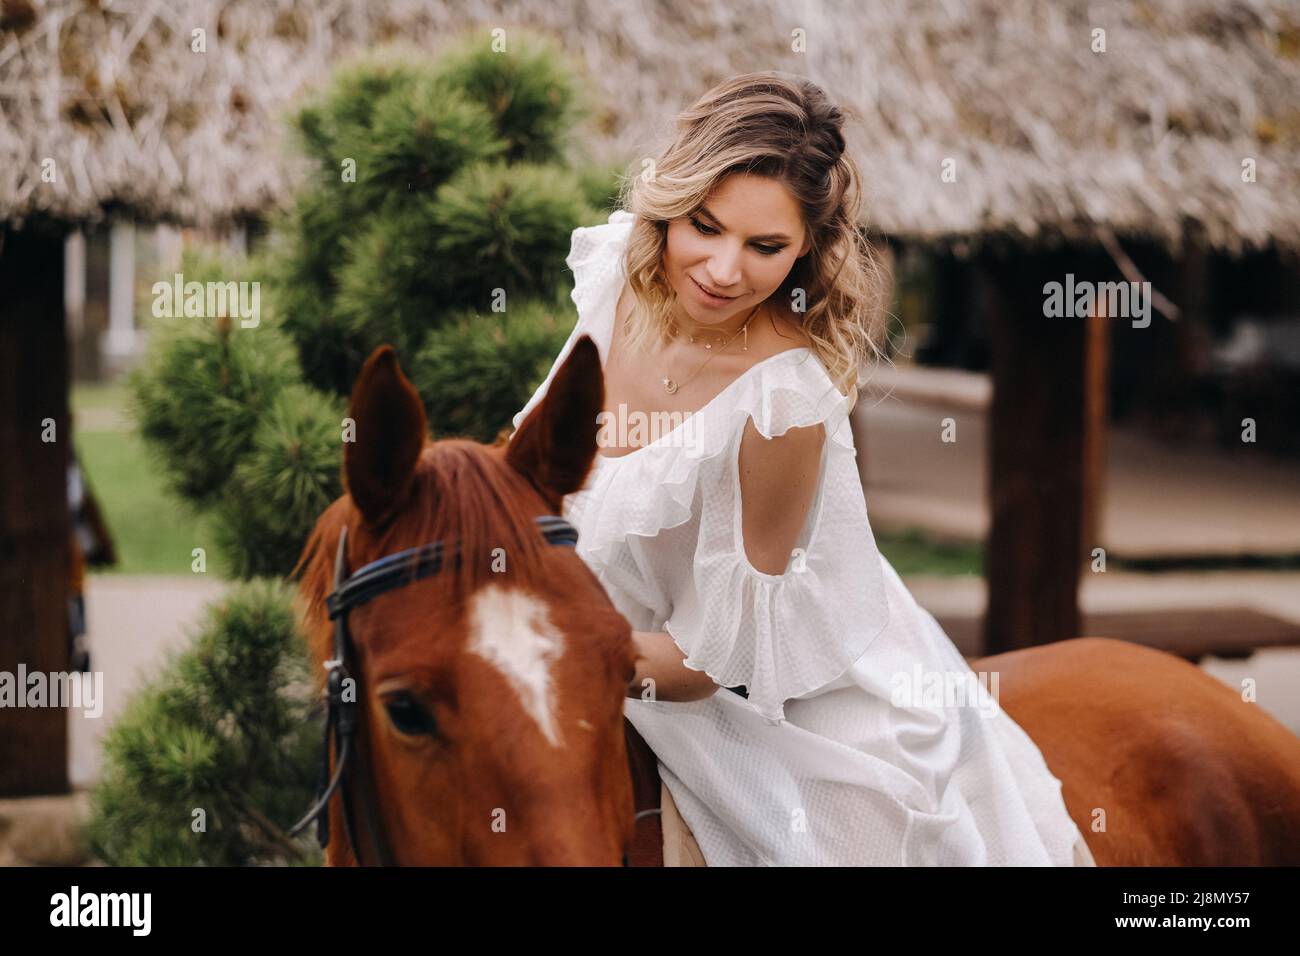 A woman in a white sundress riding a horse near a farm Stock Photo